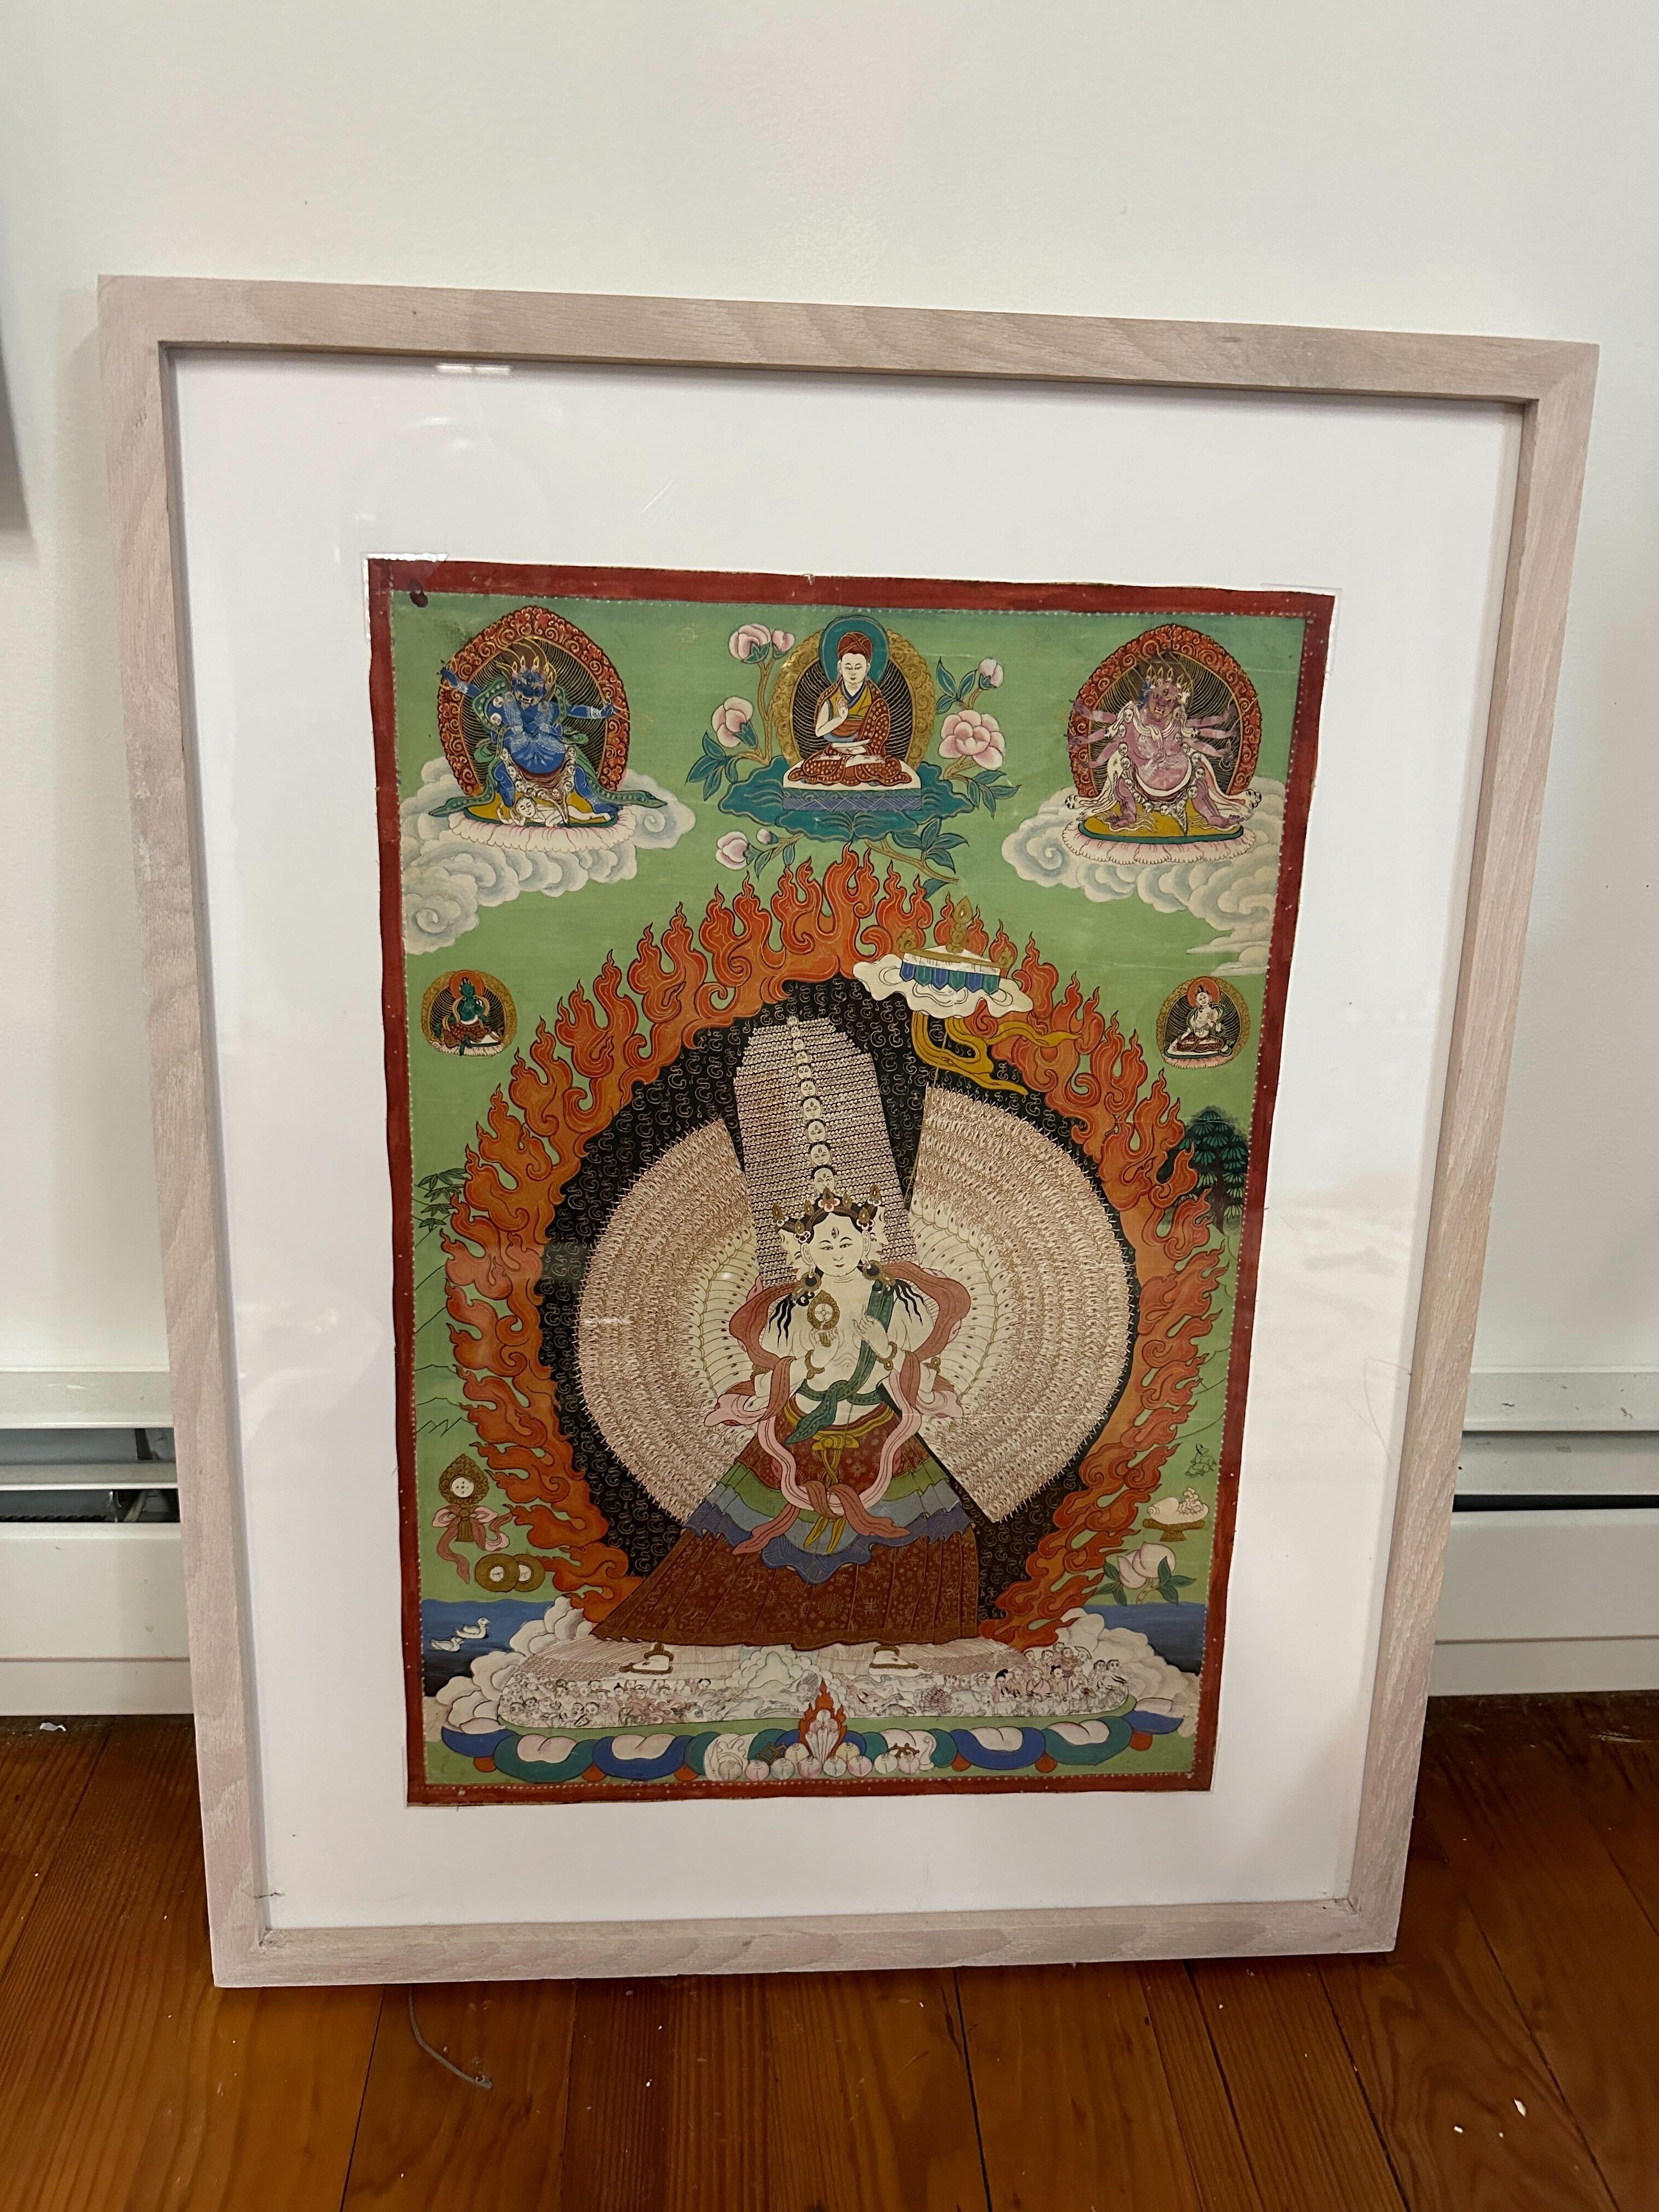 18th C Tibetan School Buddhist Painting of Sitatapatra
Painting 20